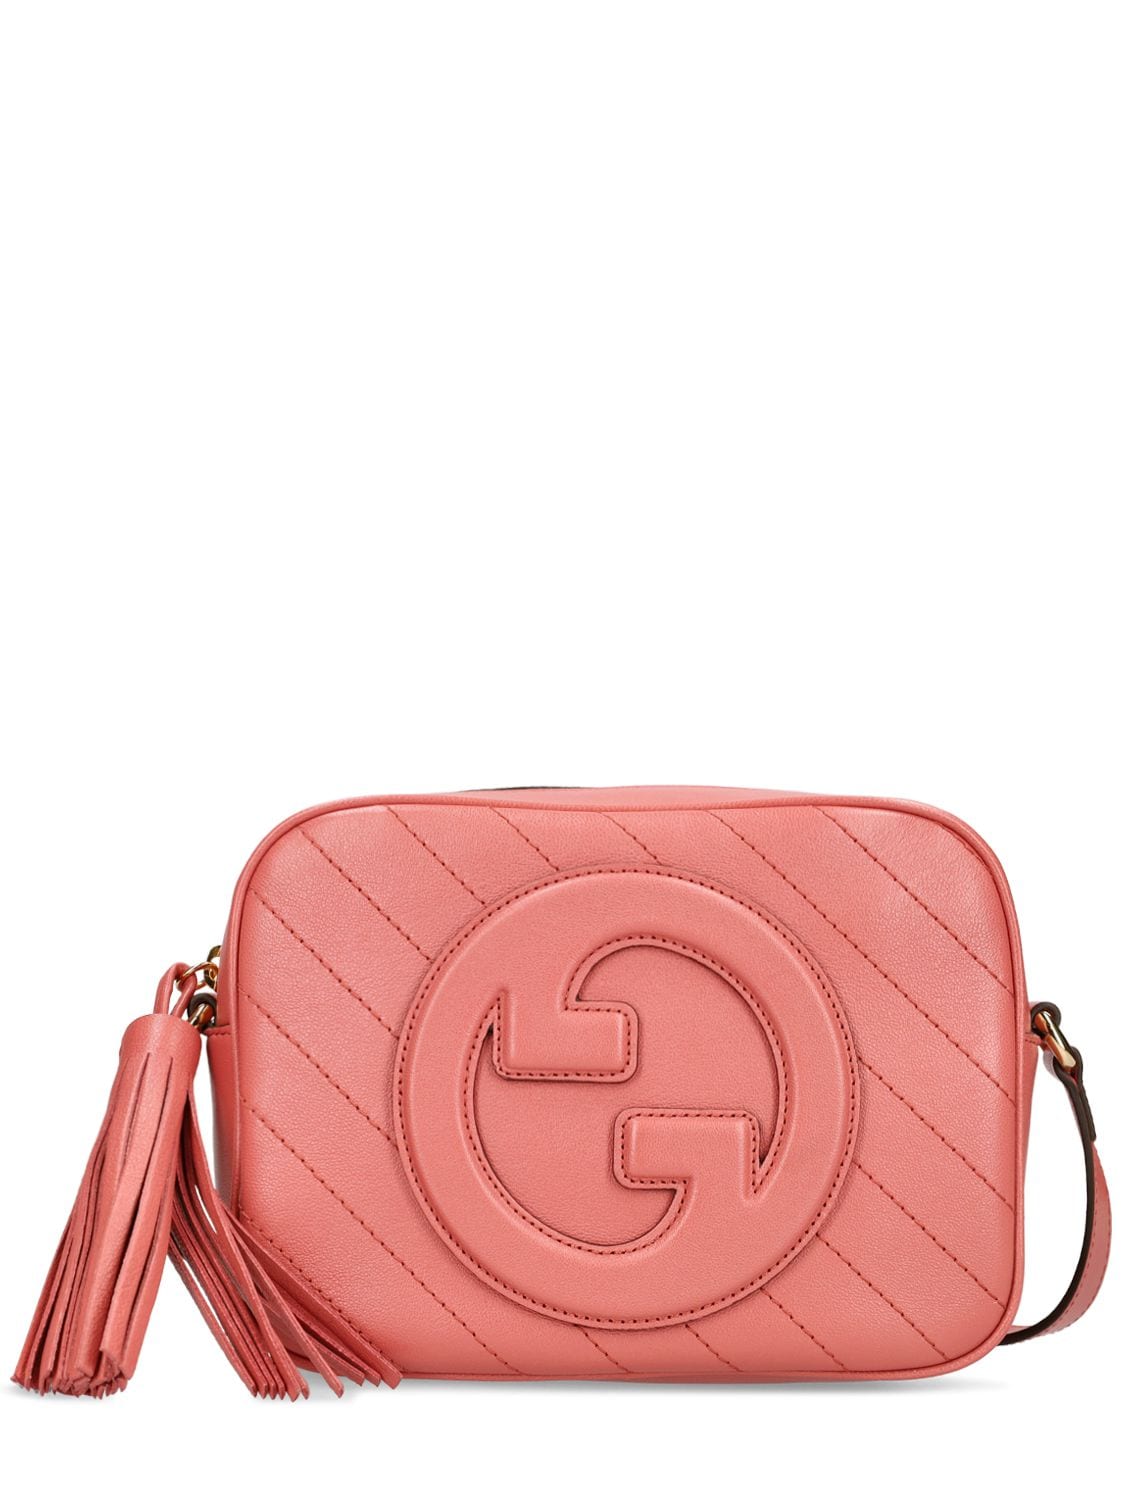 Gucci Blondie Leather Shoulder Bag In Pink